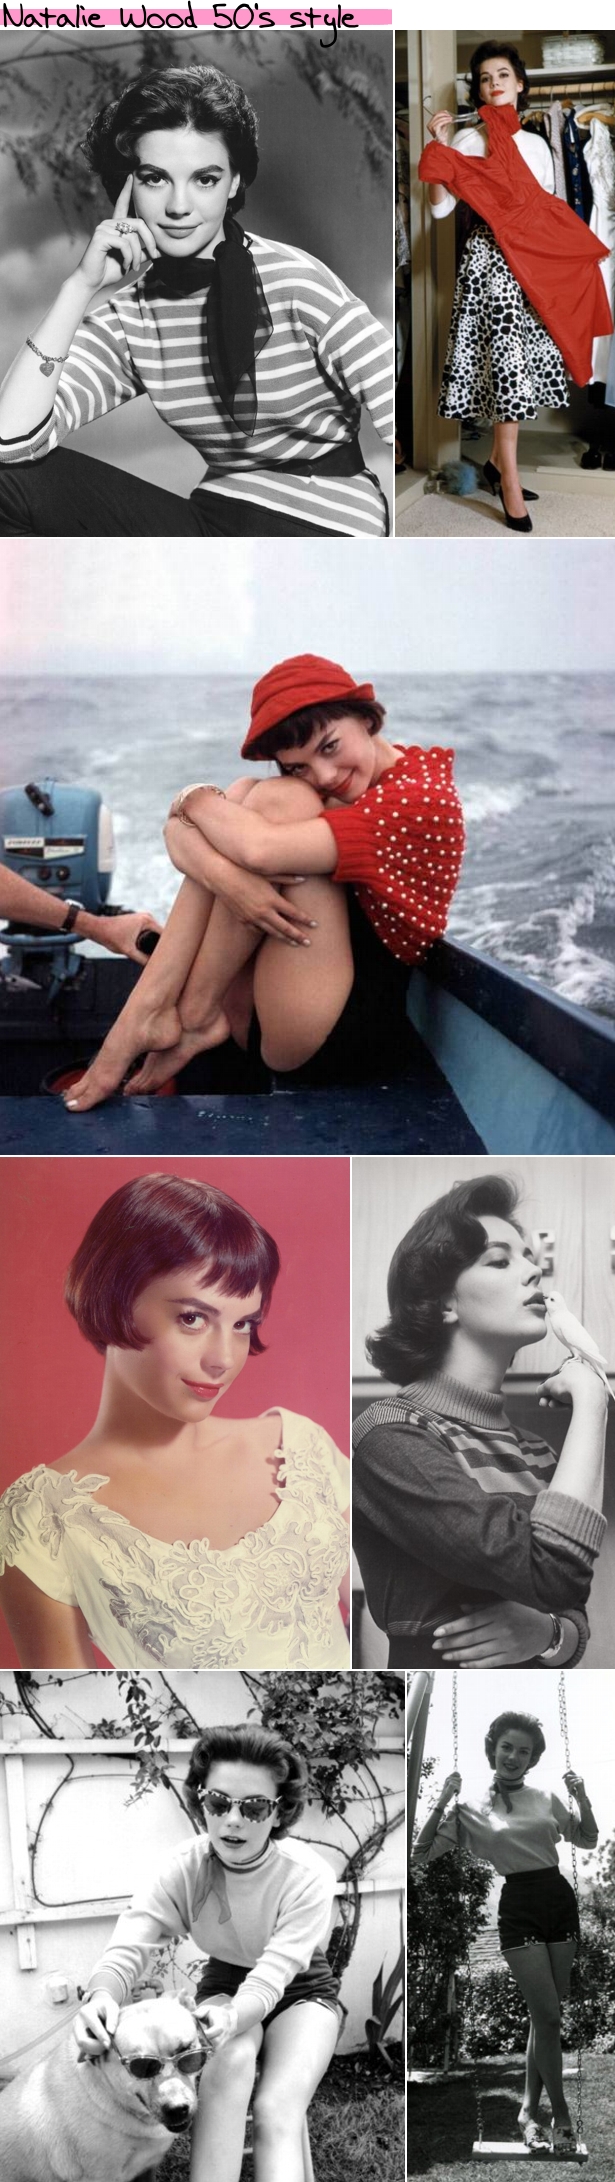 Natalie Wood 50s style Blog da Hilde celebra a beleza e o estilo da eterna musa Natalie Wood!